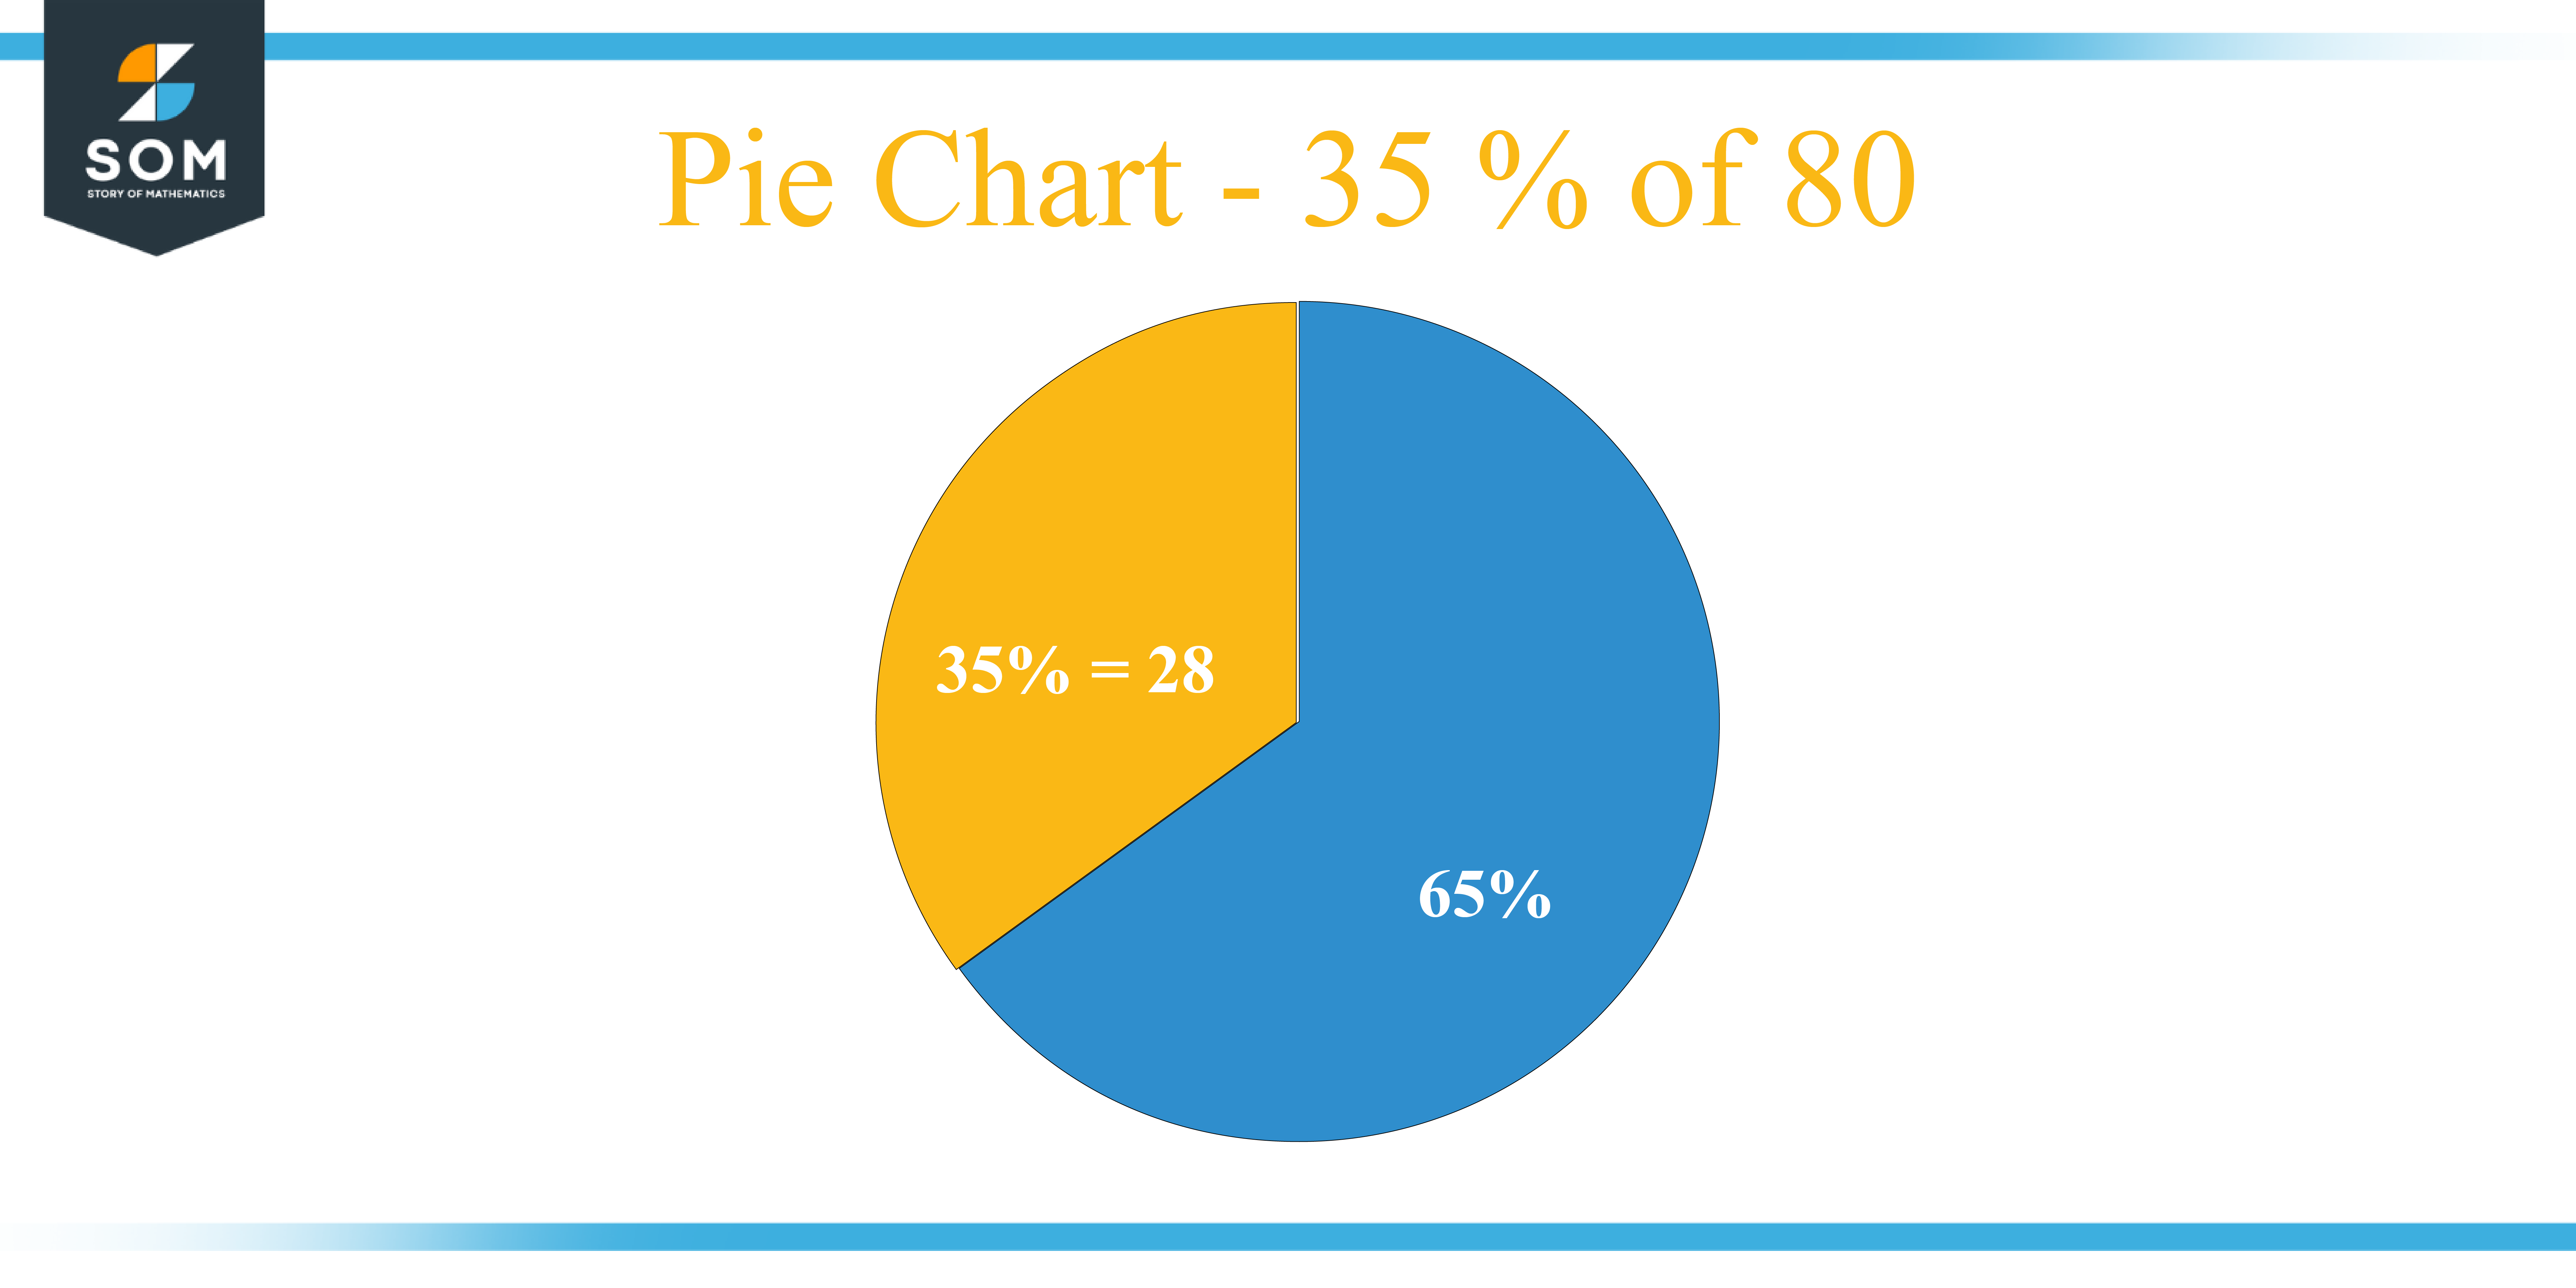 Pie Chart 35 percent of 80